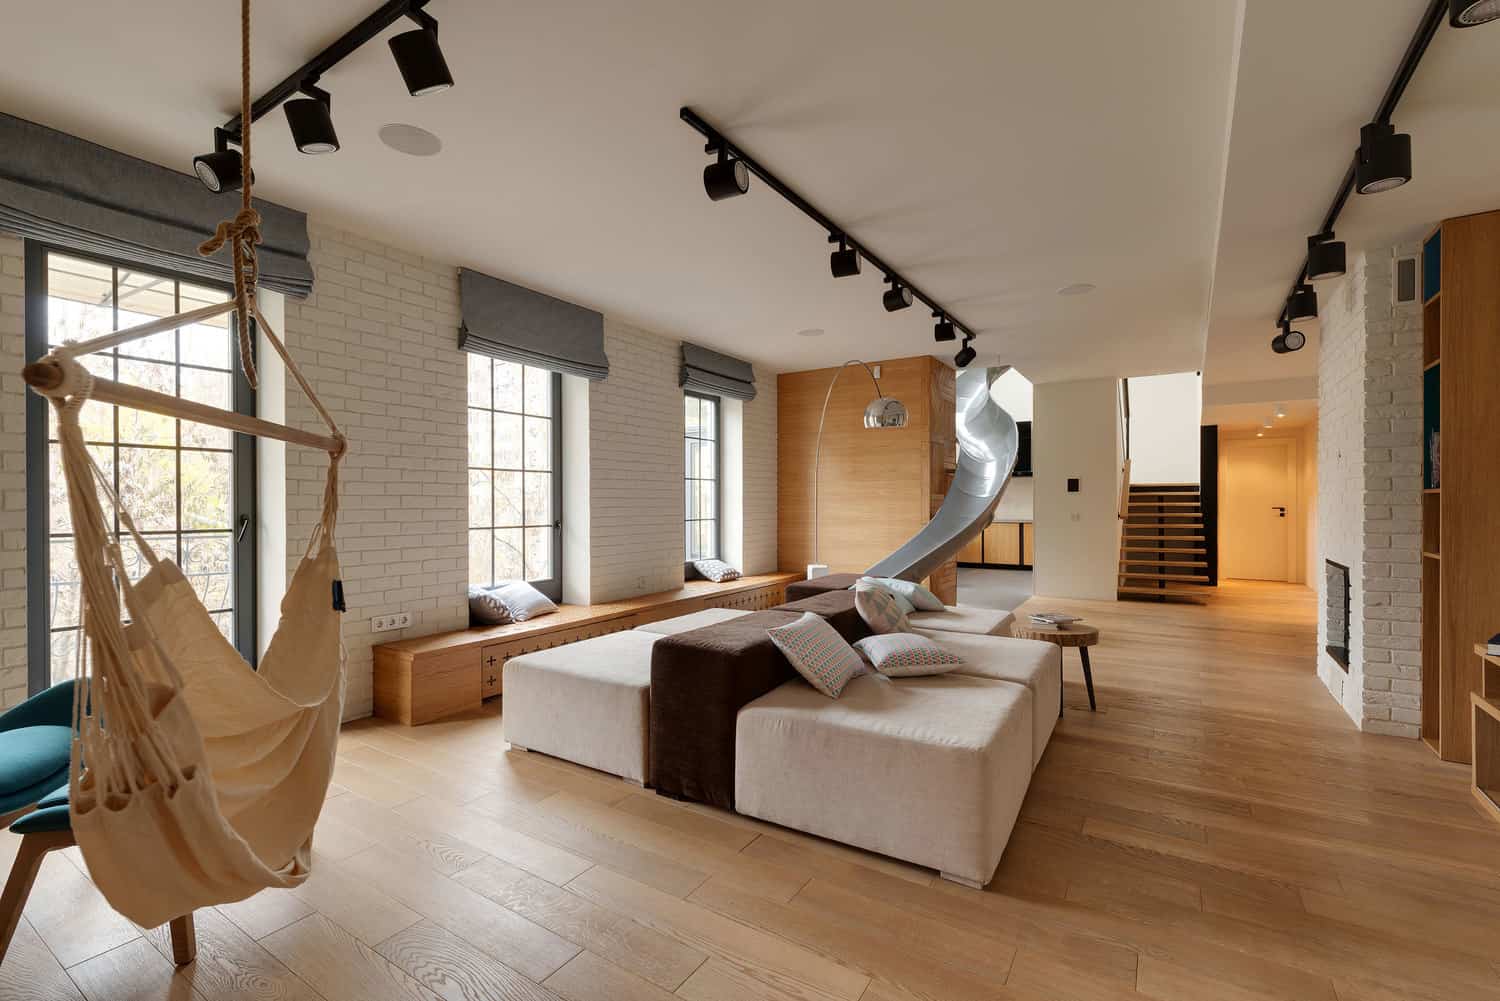 Apartment With Slide-KI Design-02-1 Kindesign